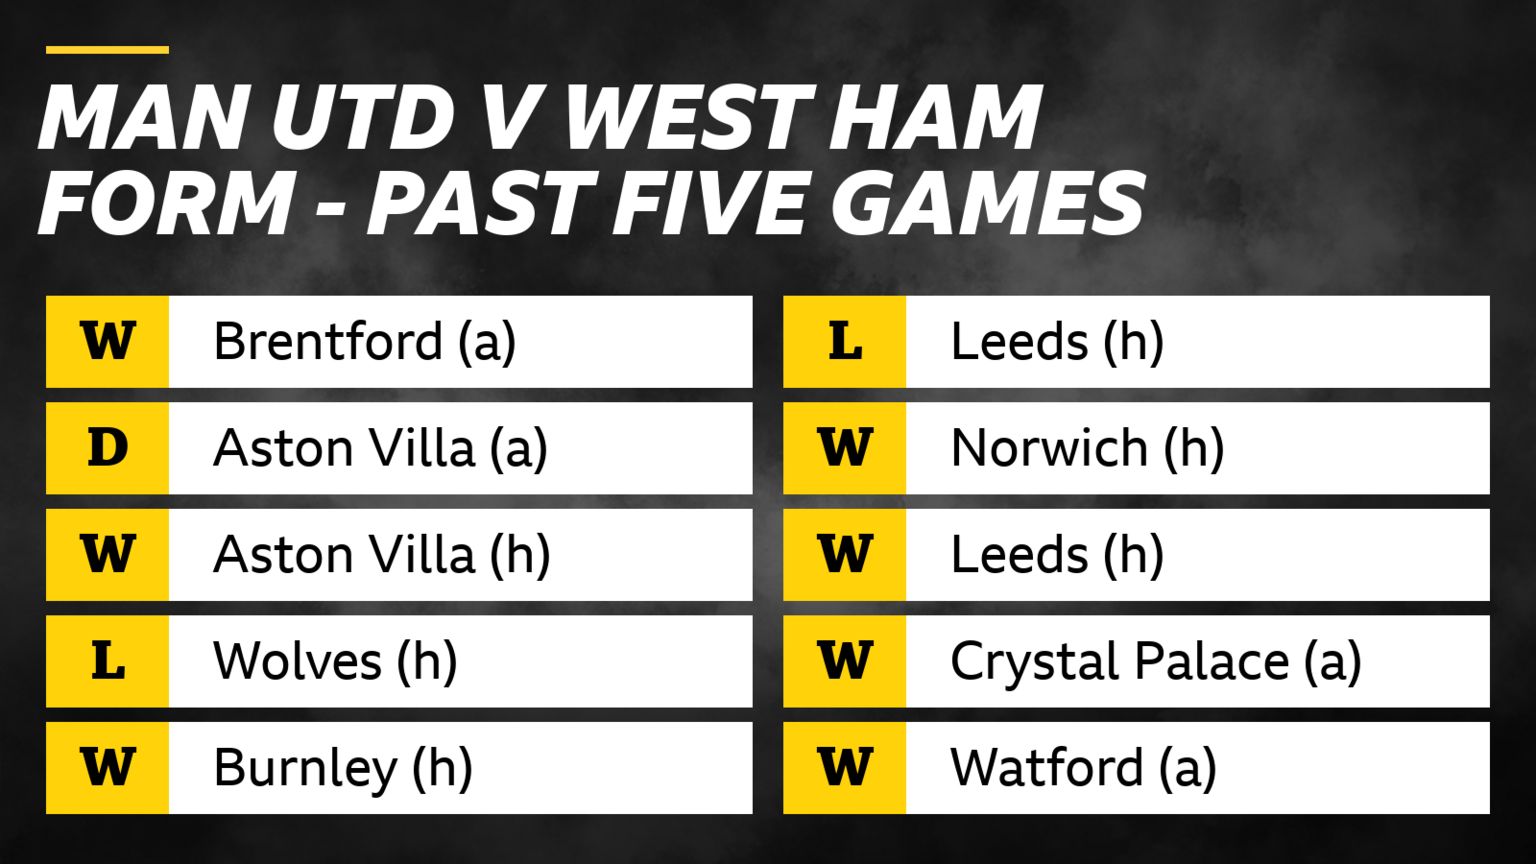 Man Utd v West Ham form - PAST FIVE GAMES.Man Utd: W Brentford (a), D Aston Villa (a), W Aston Villa (h), L Wolves (h), W Burnley (h). West Ham: L Leeds (h), W Norwich (h), W Leeds (h), W Crystal Palace (a), W Watford (a)